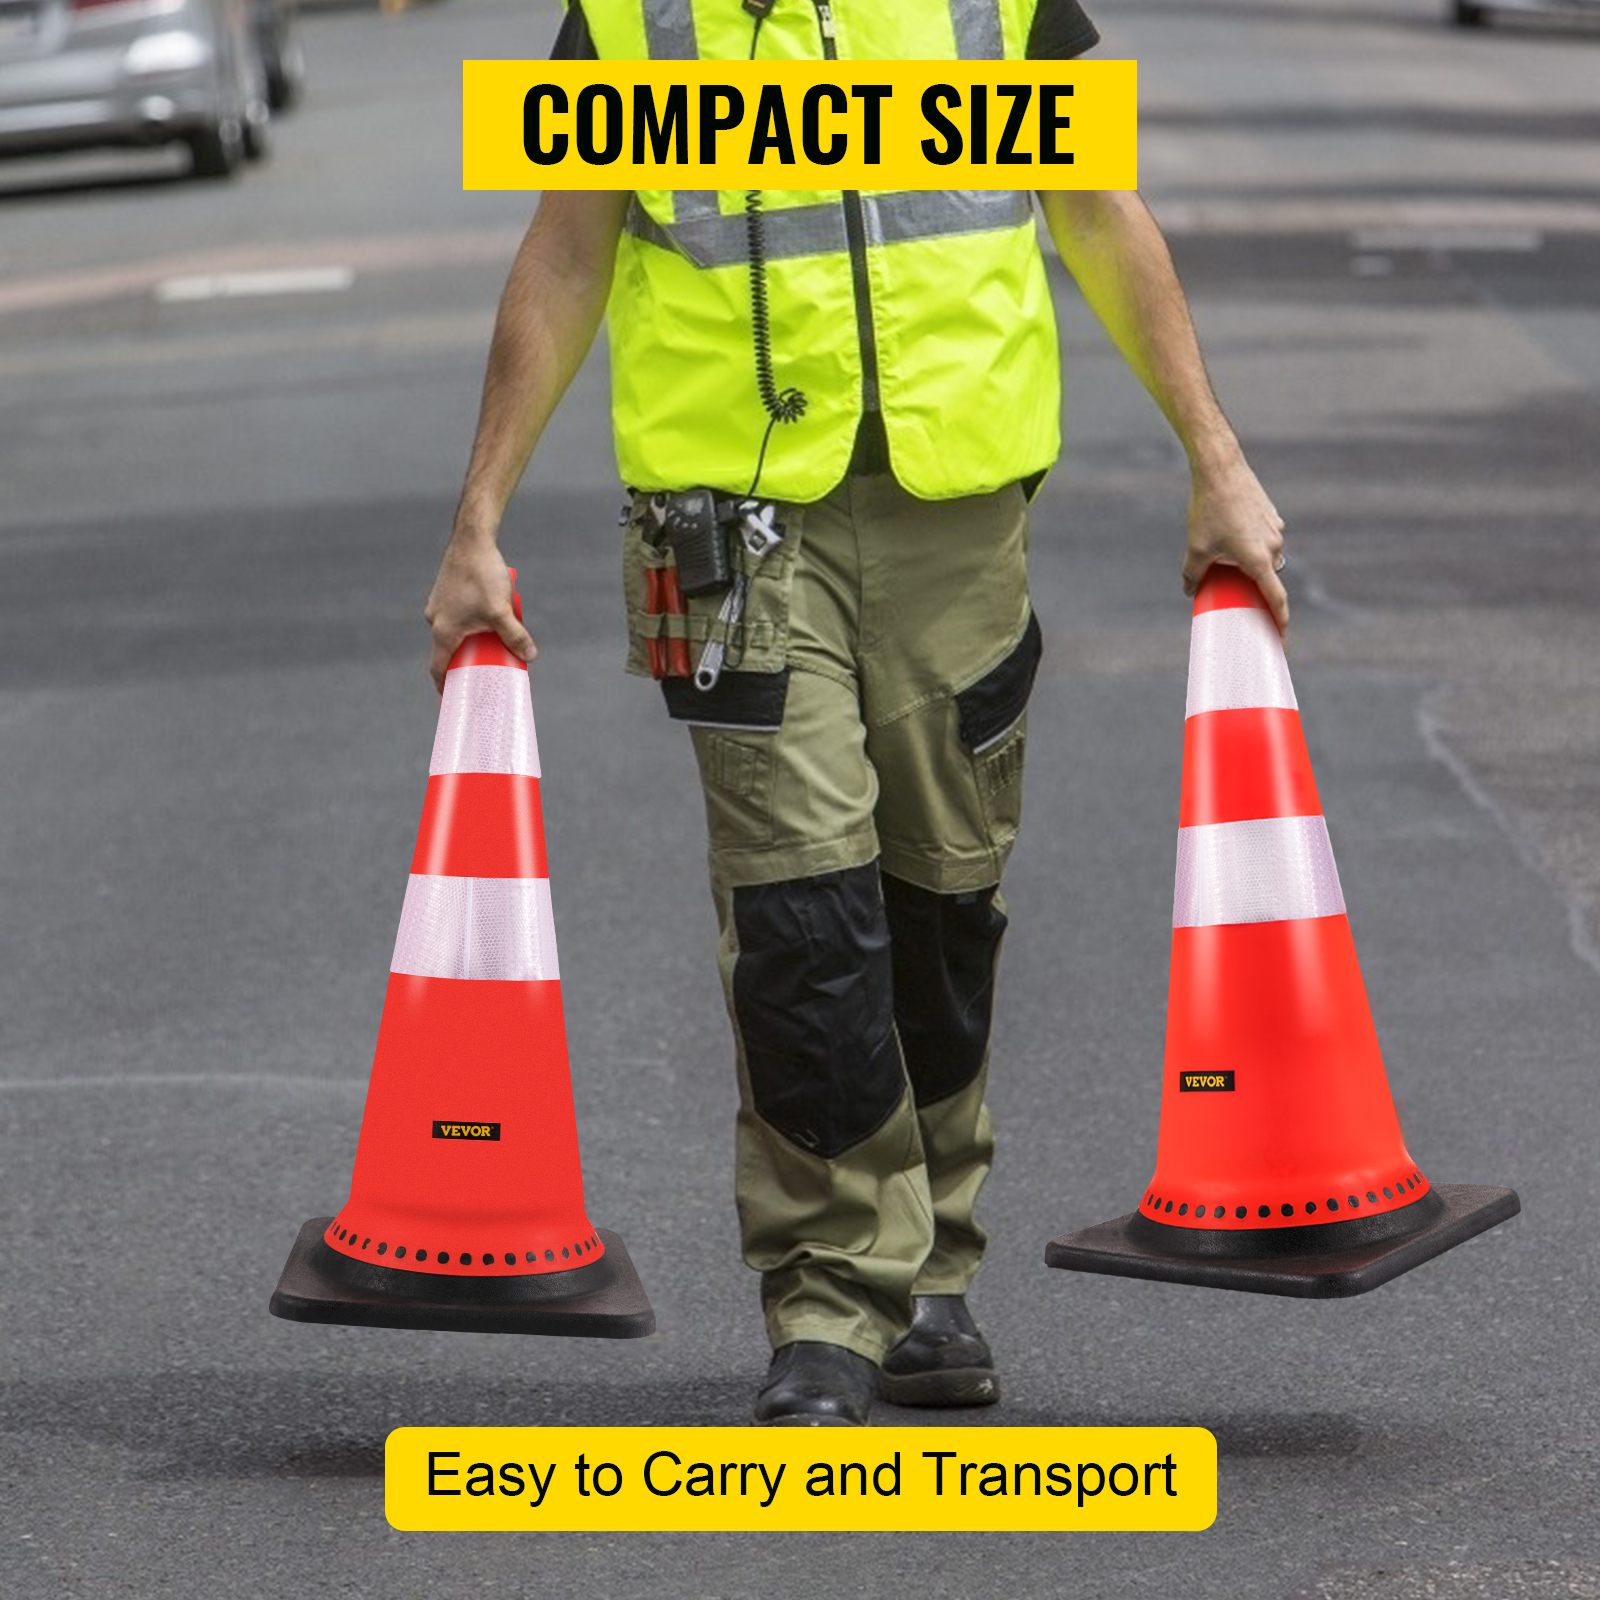 VEVOR Safety Cones, 18 in/45 cm Height, 5 PCS PVC Orange Traffic